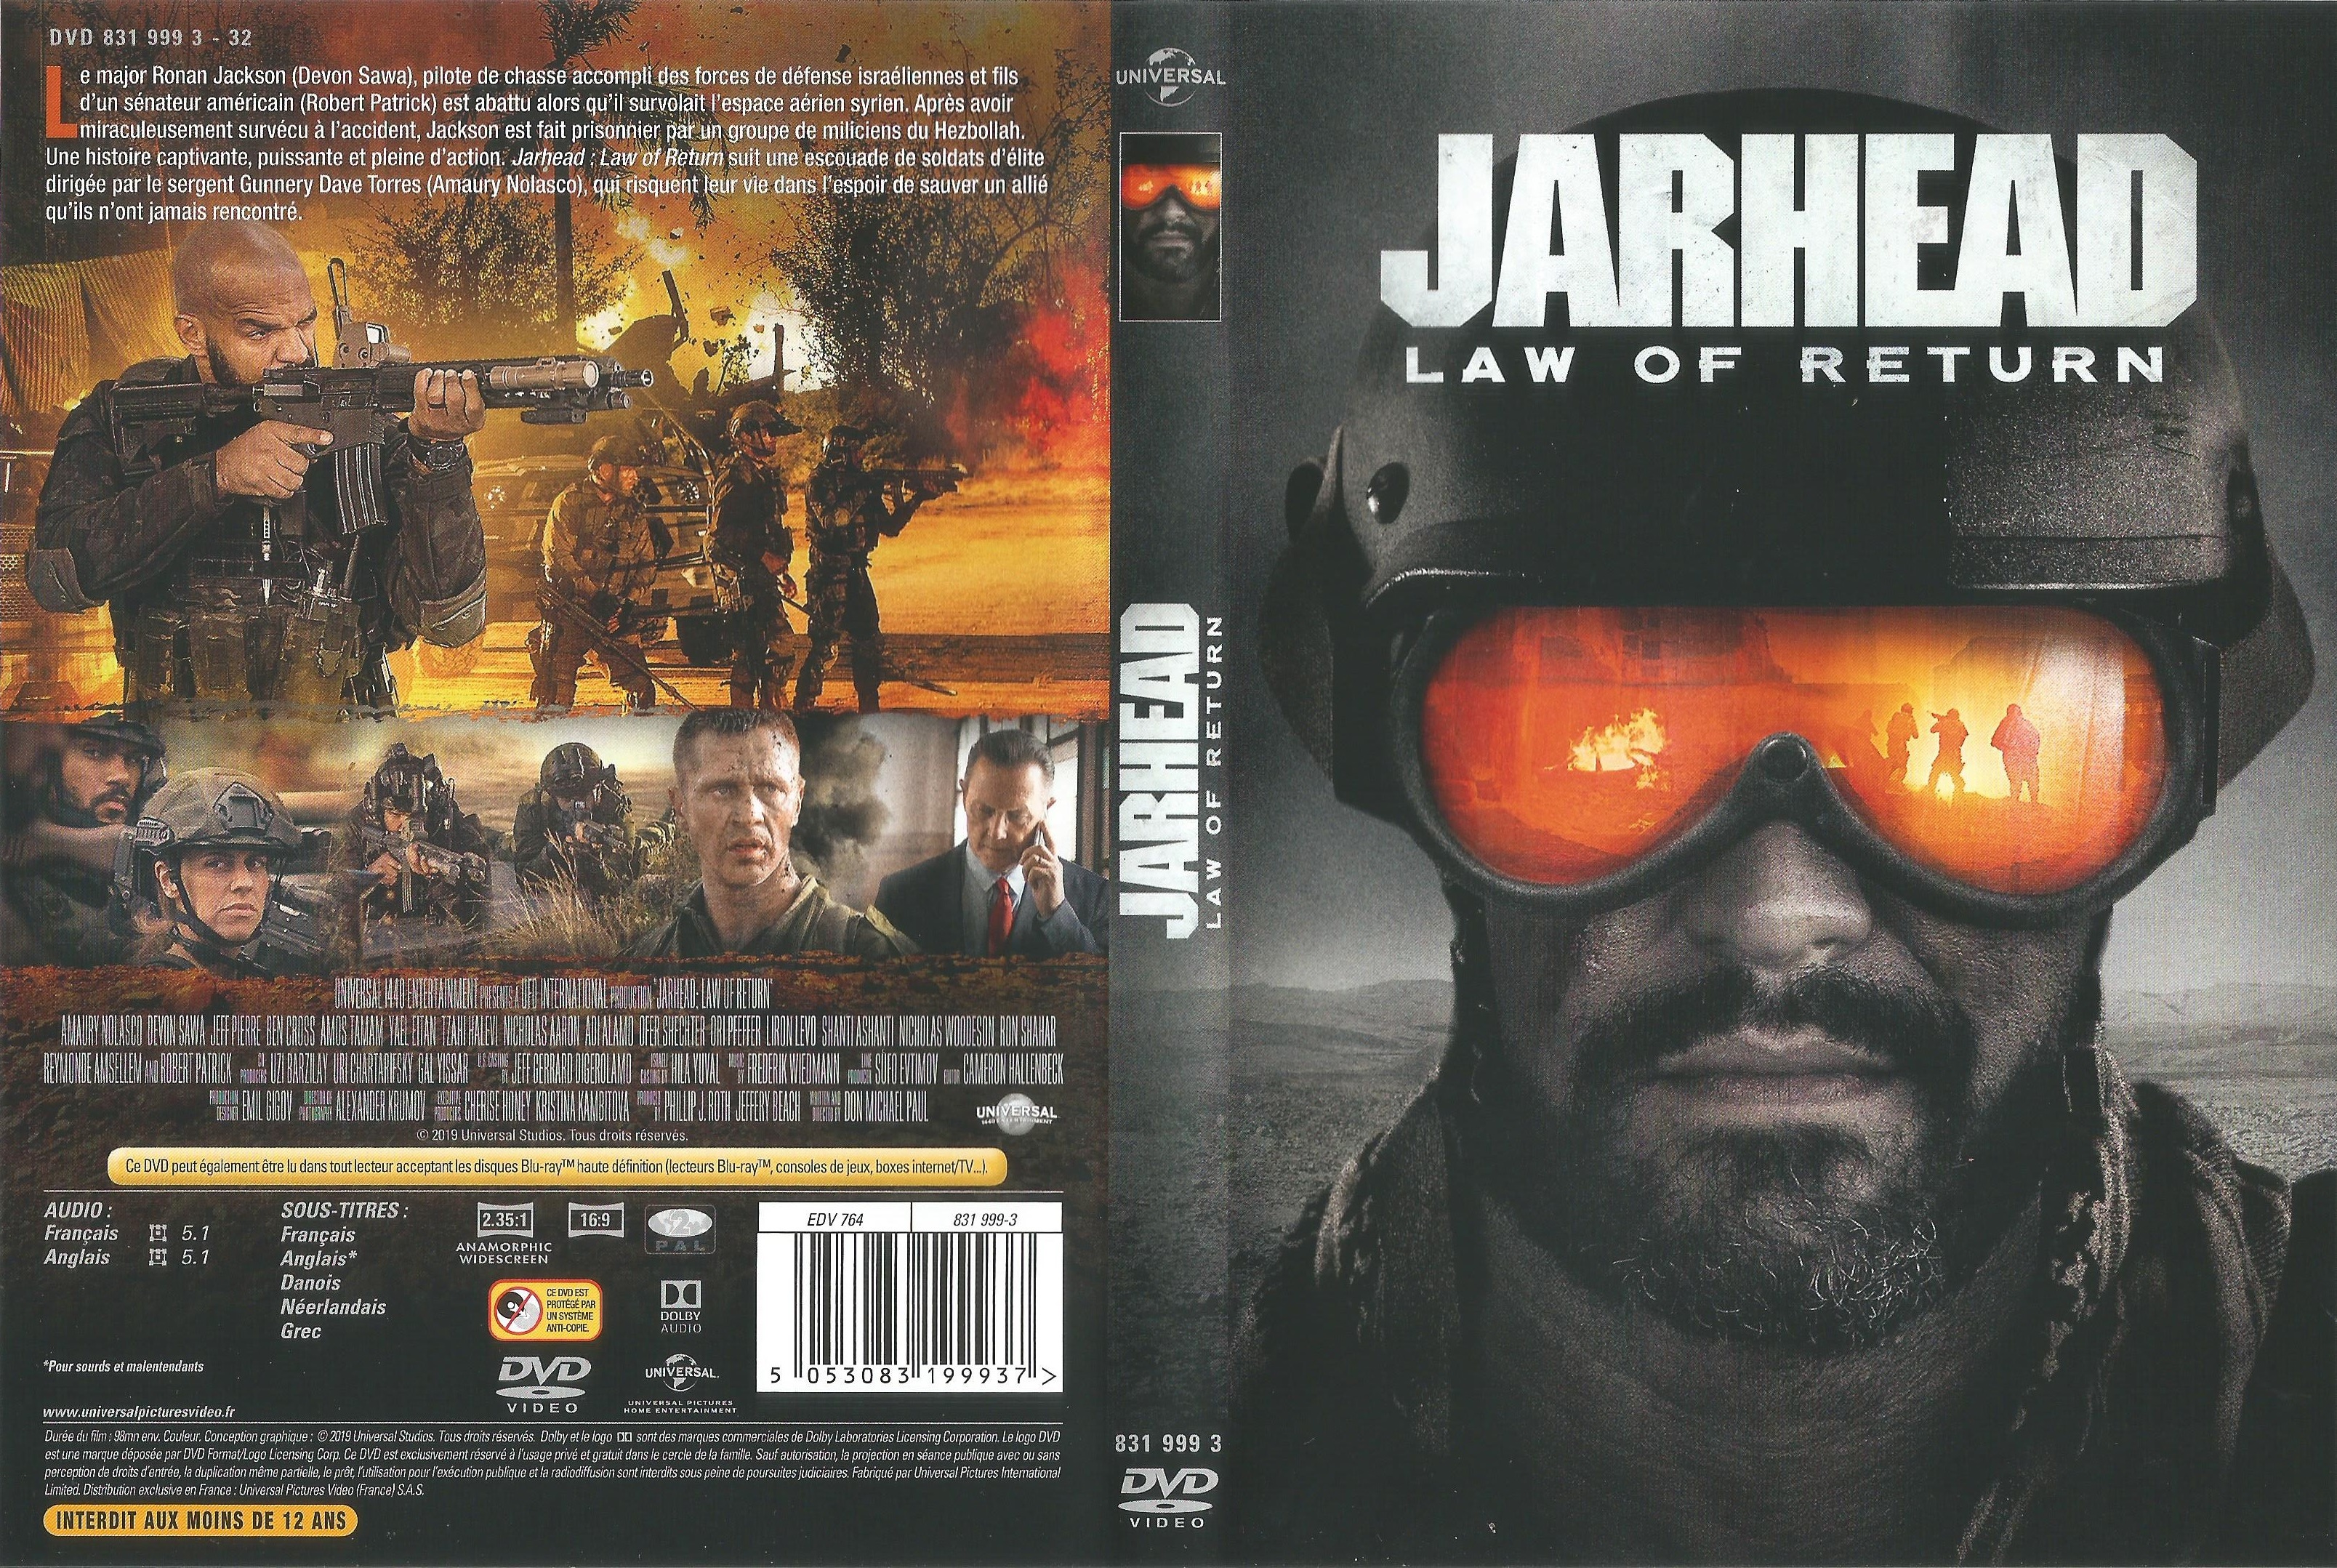 Jaquette DVD Jarhead Law of Return